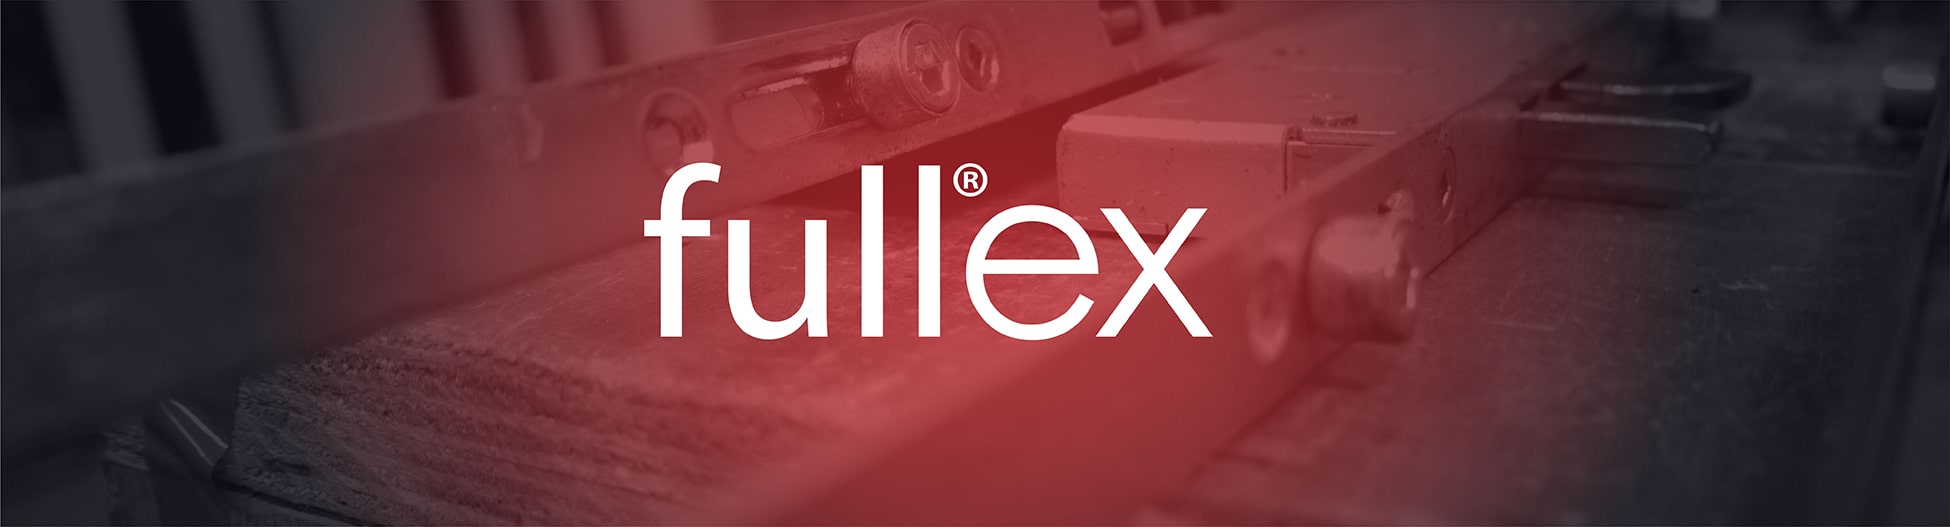 Fullex - UAP Ltd - Door Hardware and Security Products